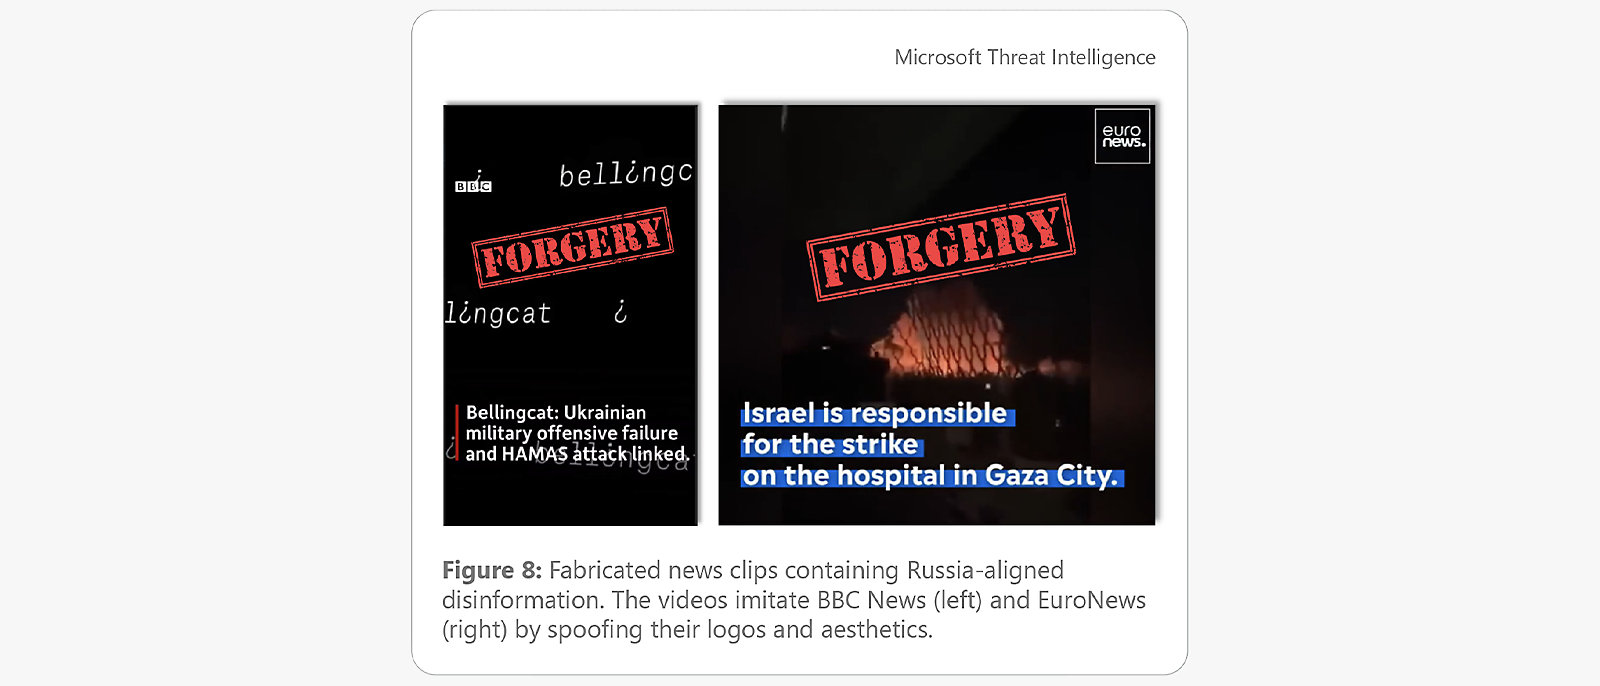 Microsoft Threat Intelligence: Fabricated news links Ukraine military failure, HAMAS attack, false Israel responsibility